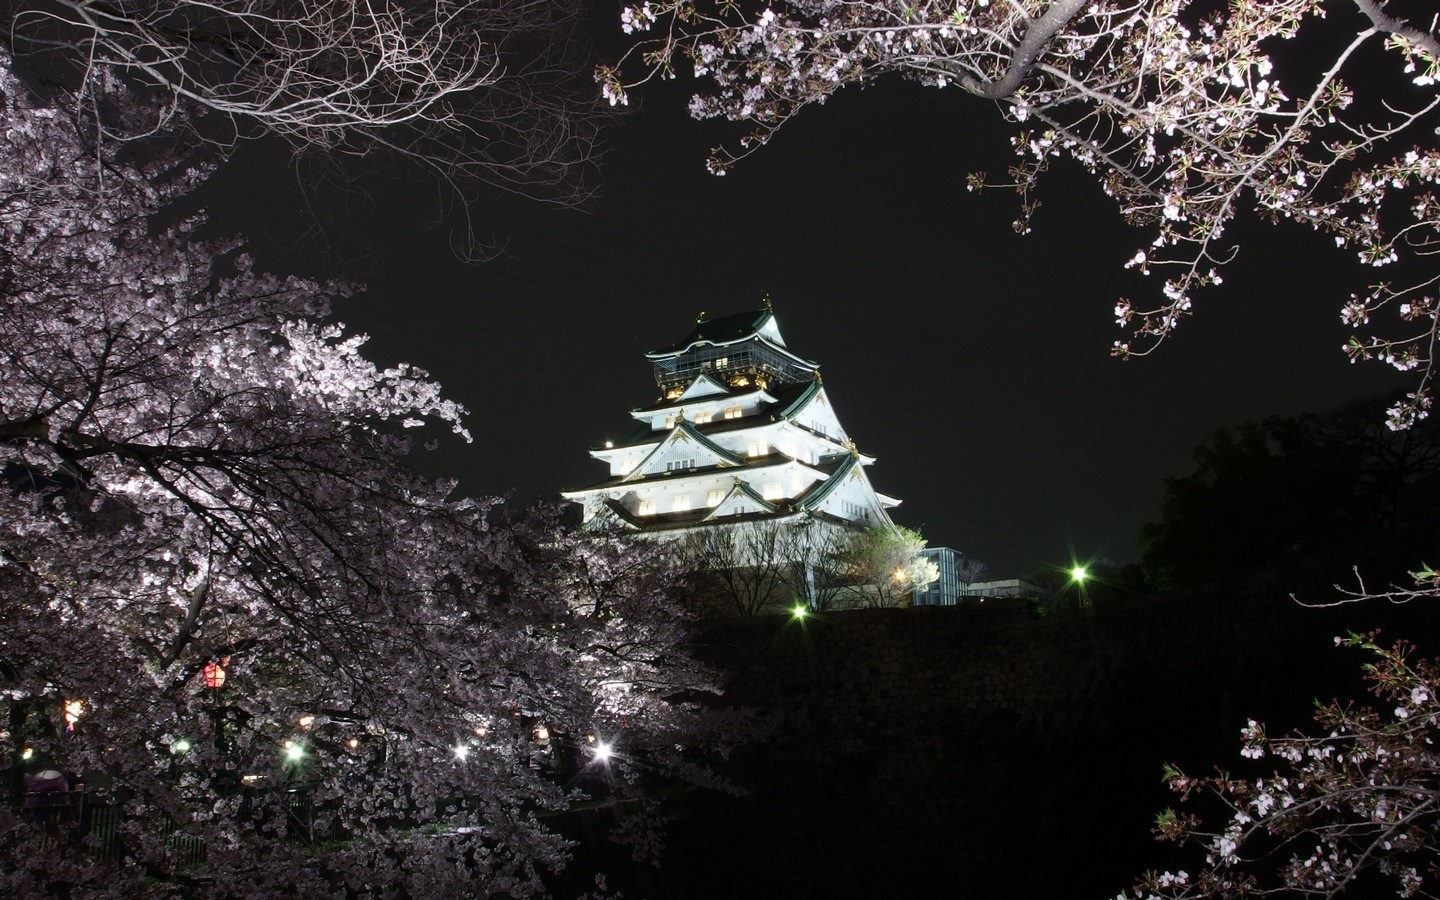  Osaka Castle, Japan: Rising from the ground - Sheet1